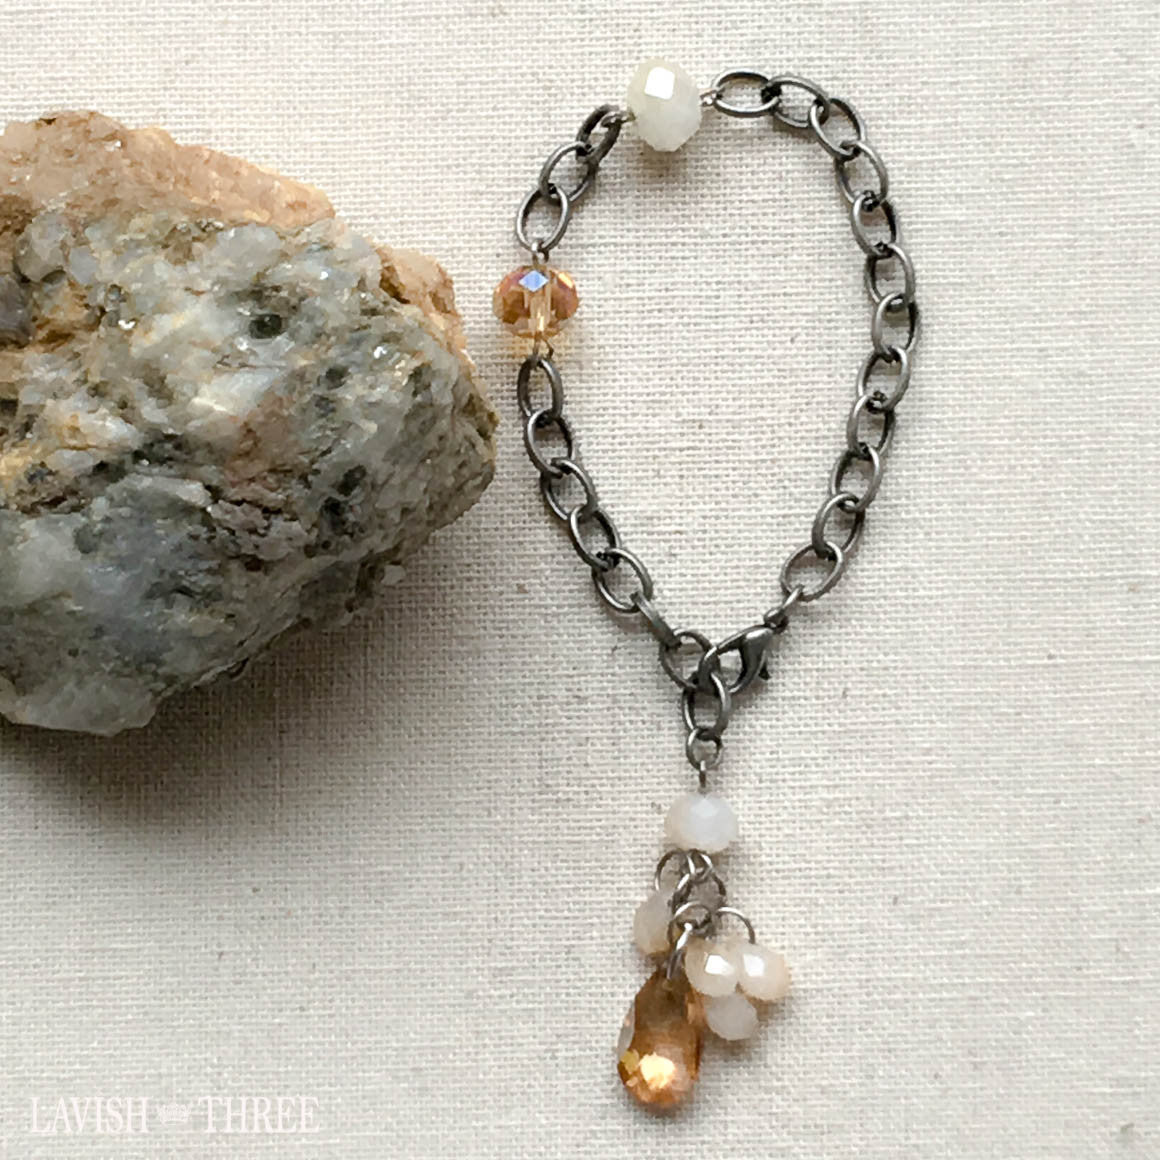 brushed silver bracelet with crystal bead and gem pendant, Lavish Three